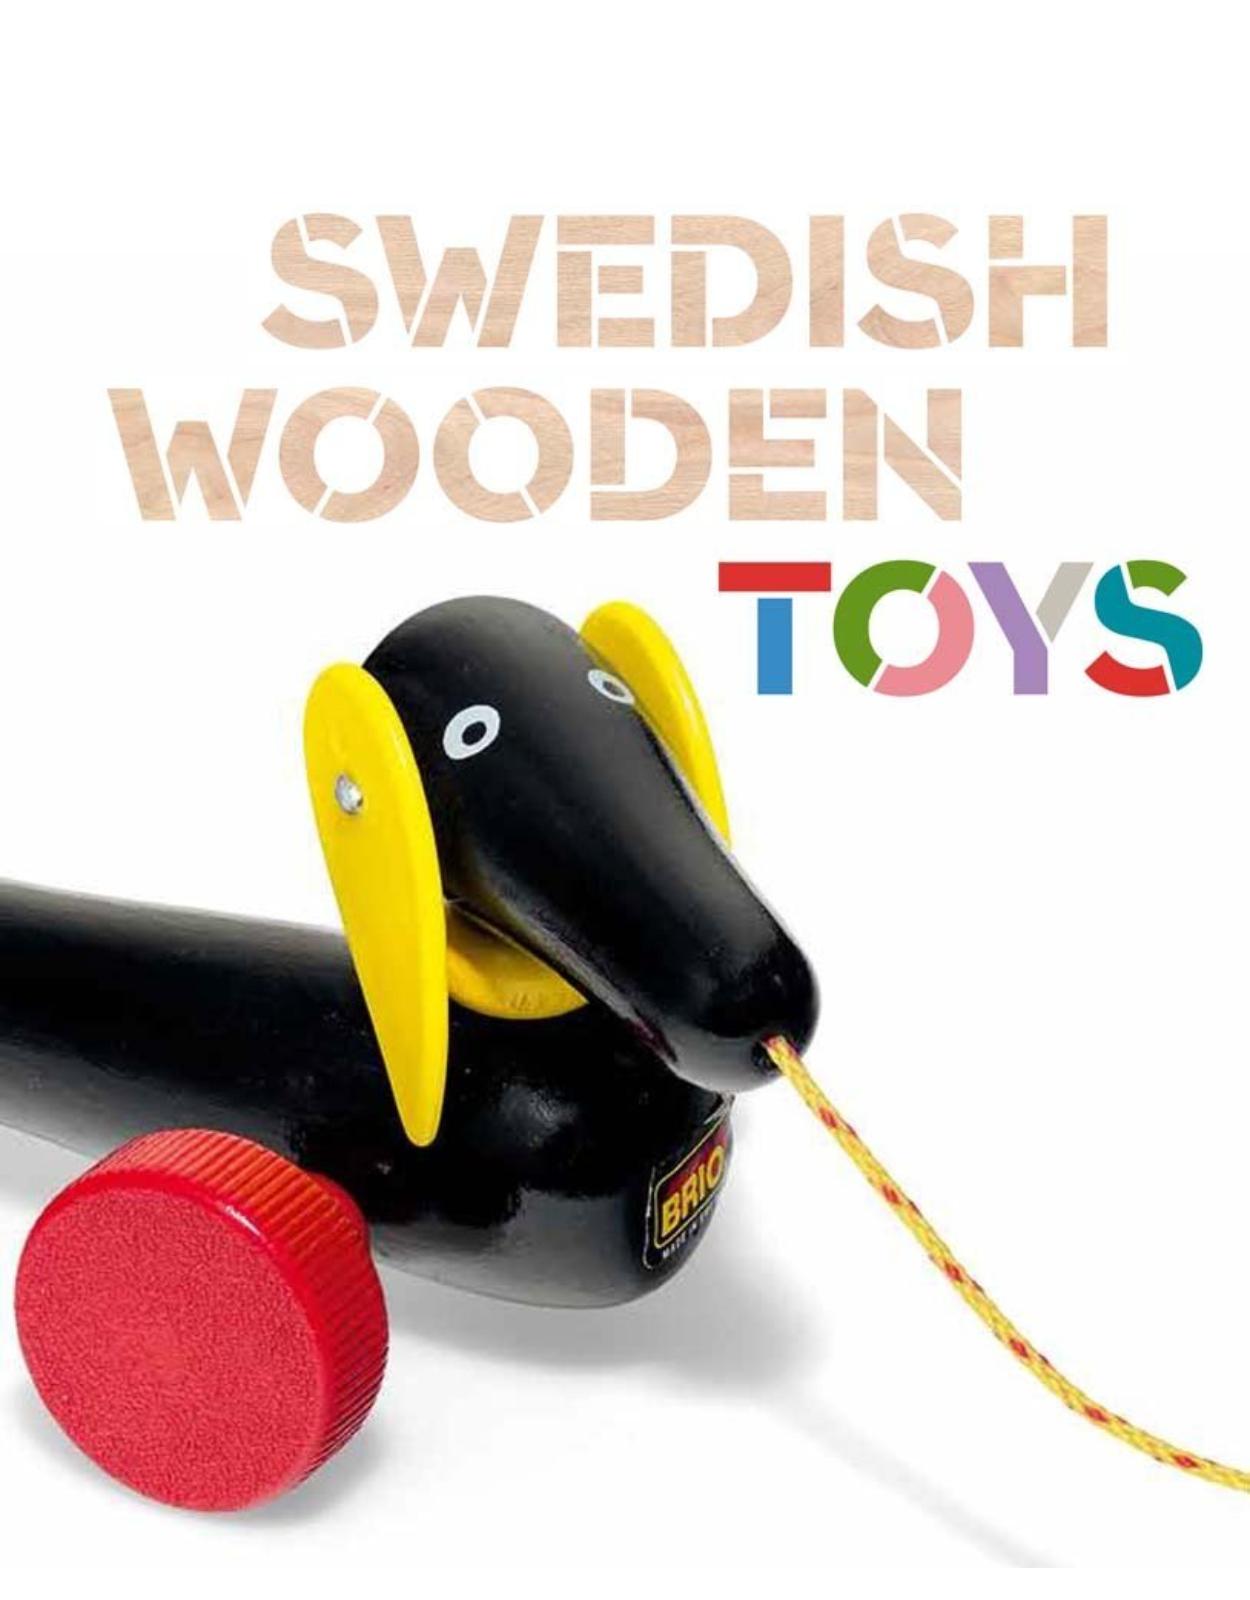 Swedish Wooden Toys.